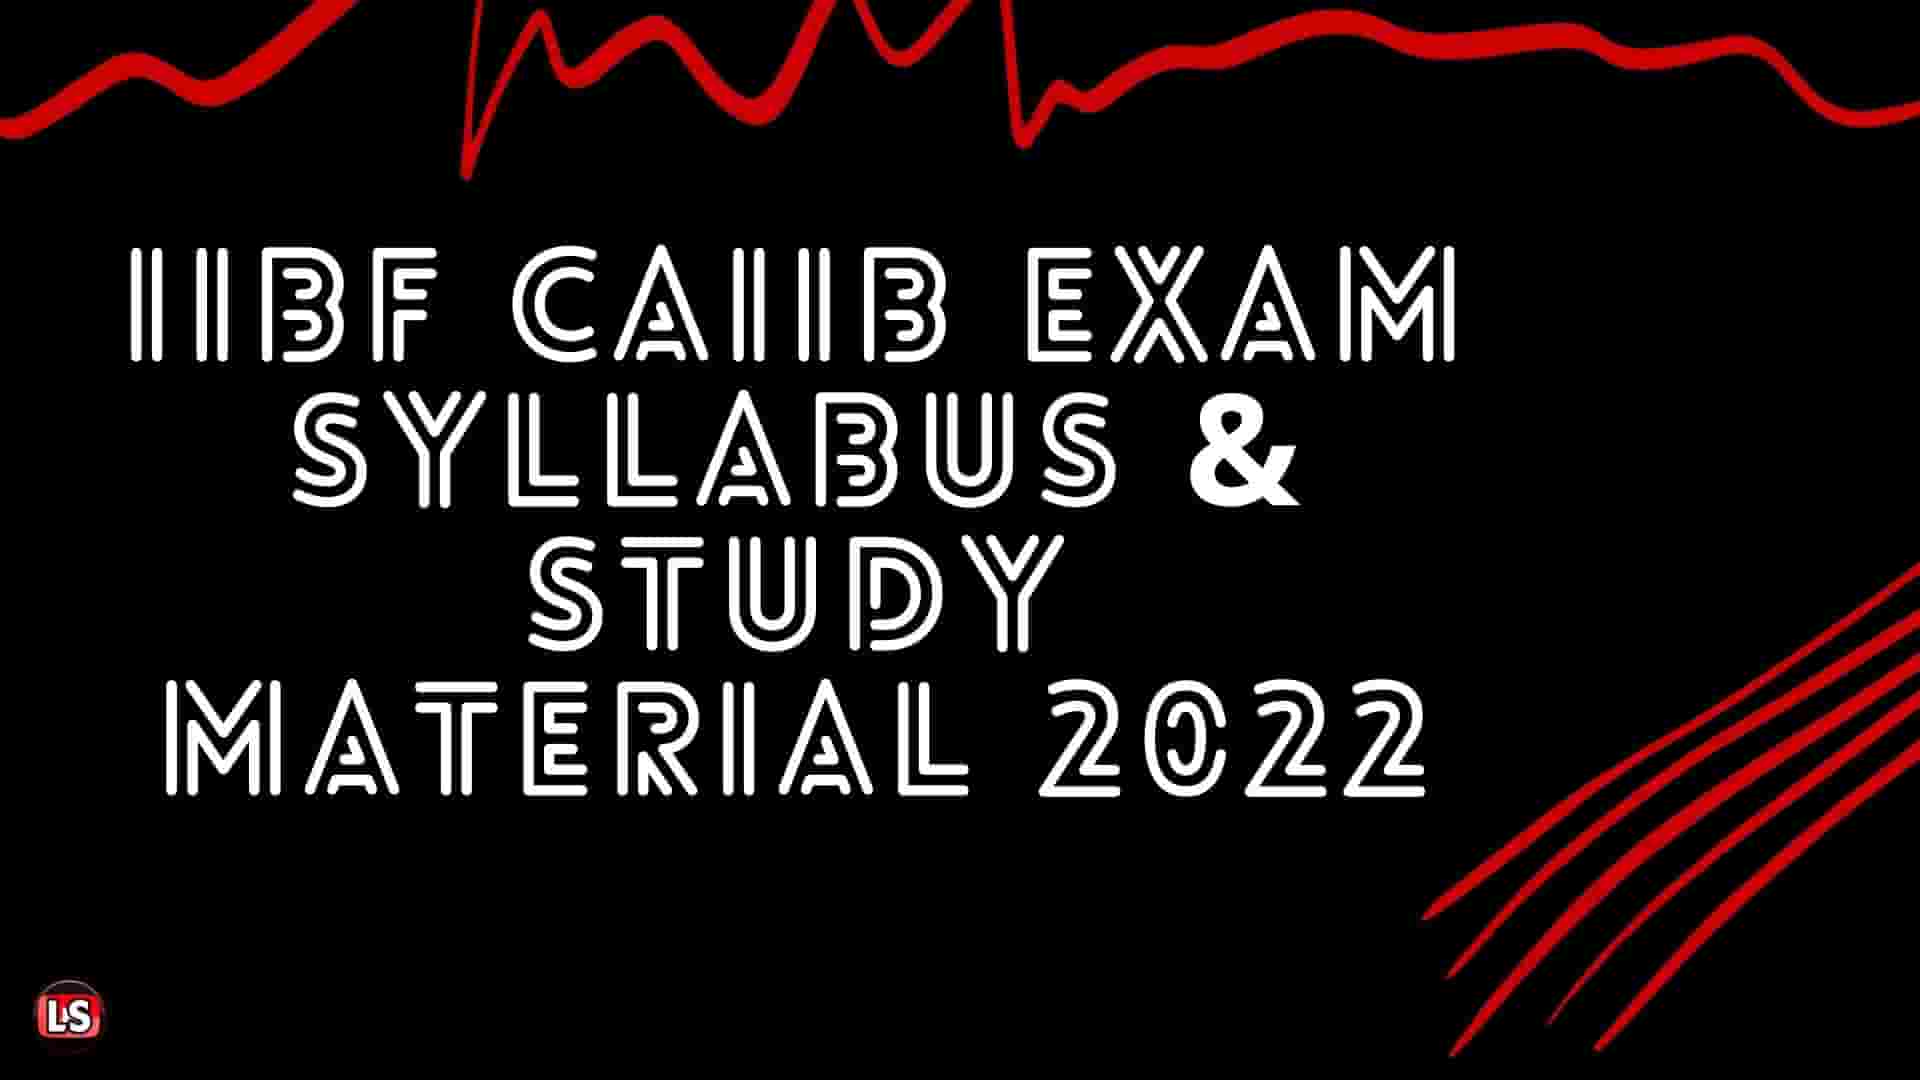 IIBF CAIIB EXAM SYLLABUS & STUDY MATERIAL 2022